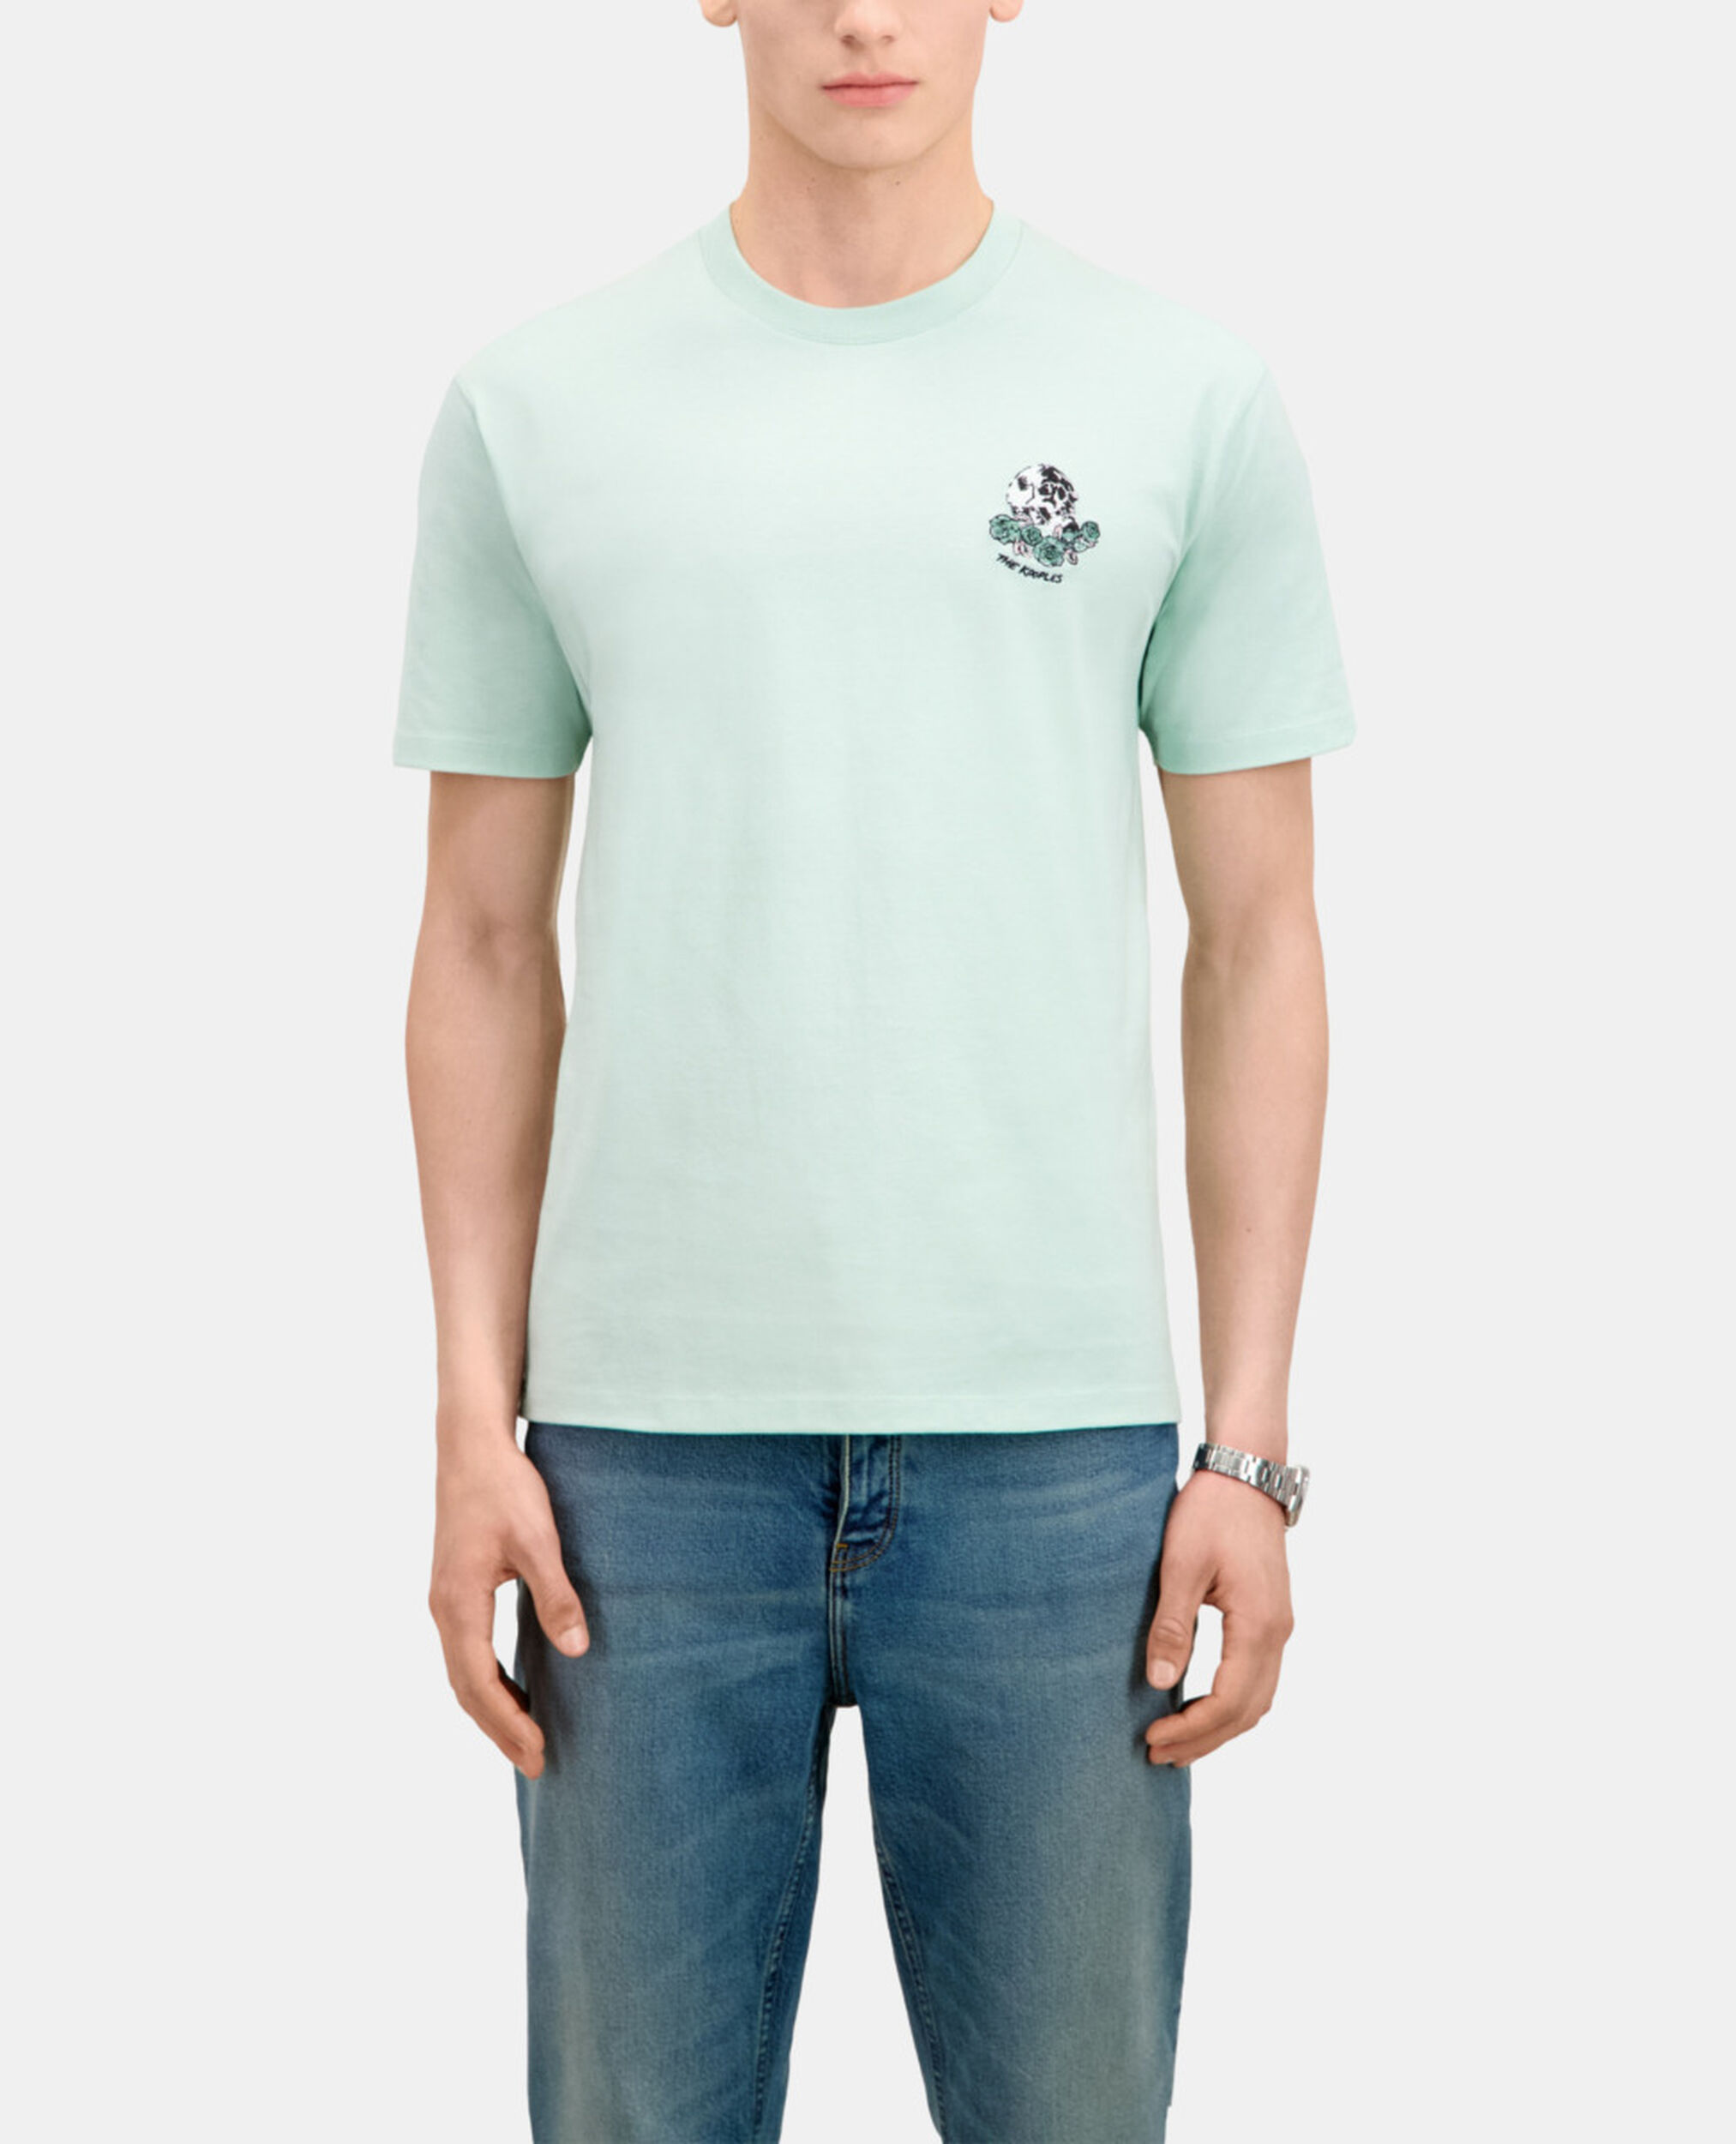 Grünes T-Shirt mit Vintage-Skull-Stickerei, OCEAN, hi-res image number null